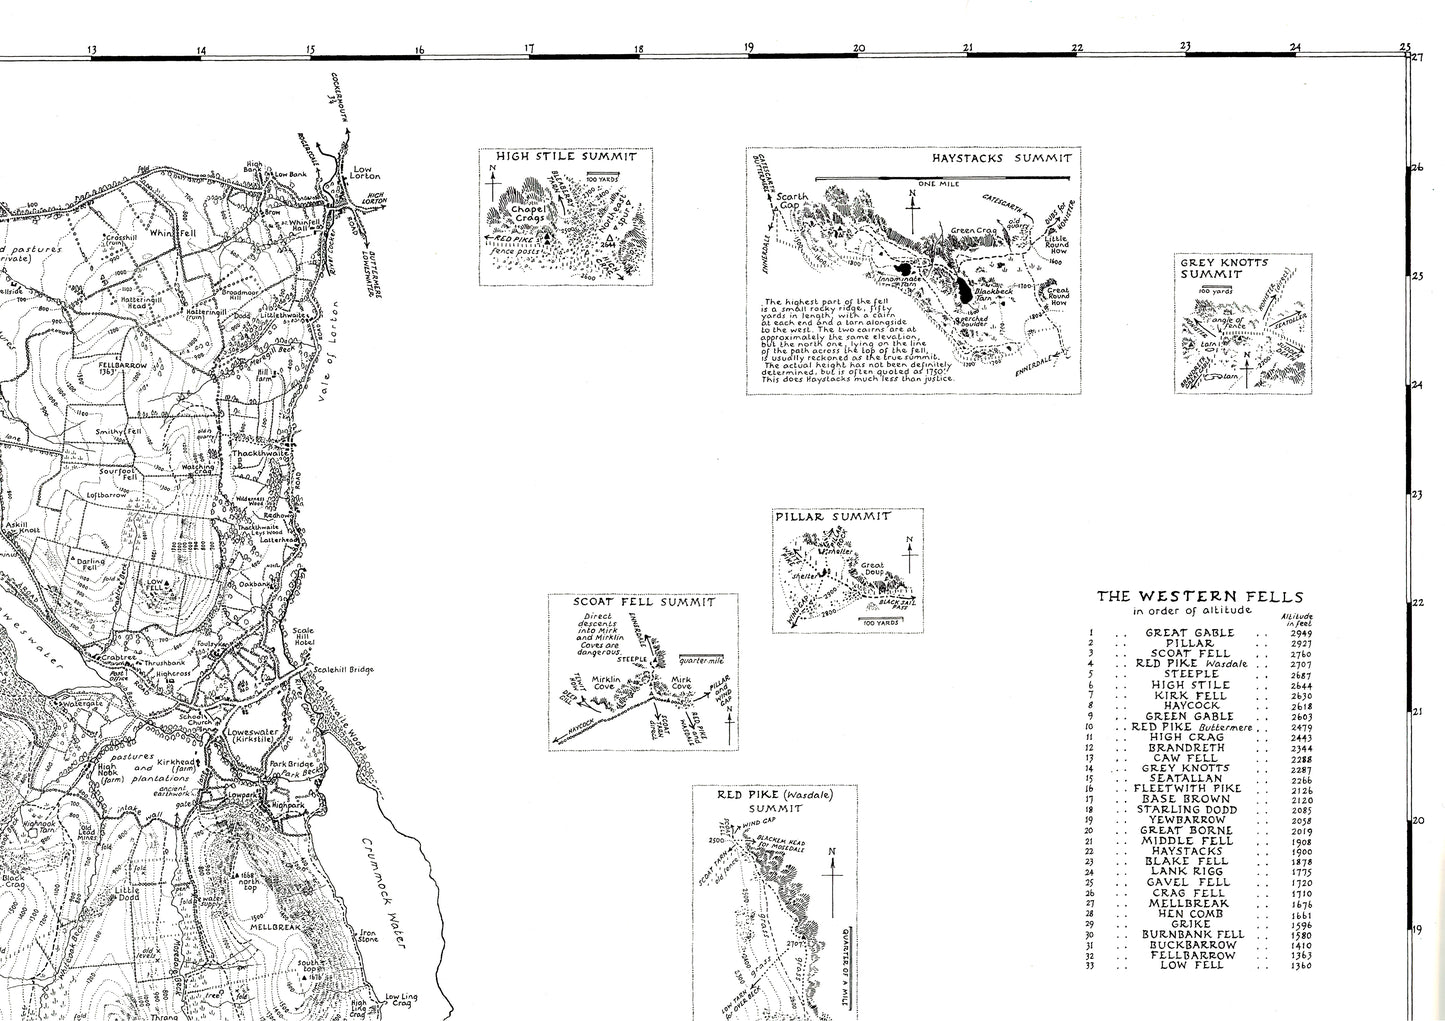 The Western Fells | Wainwright Map | The Lake District | Rare Print